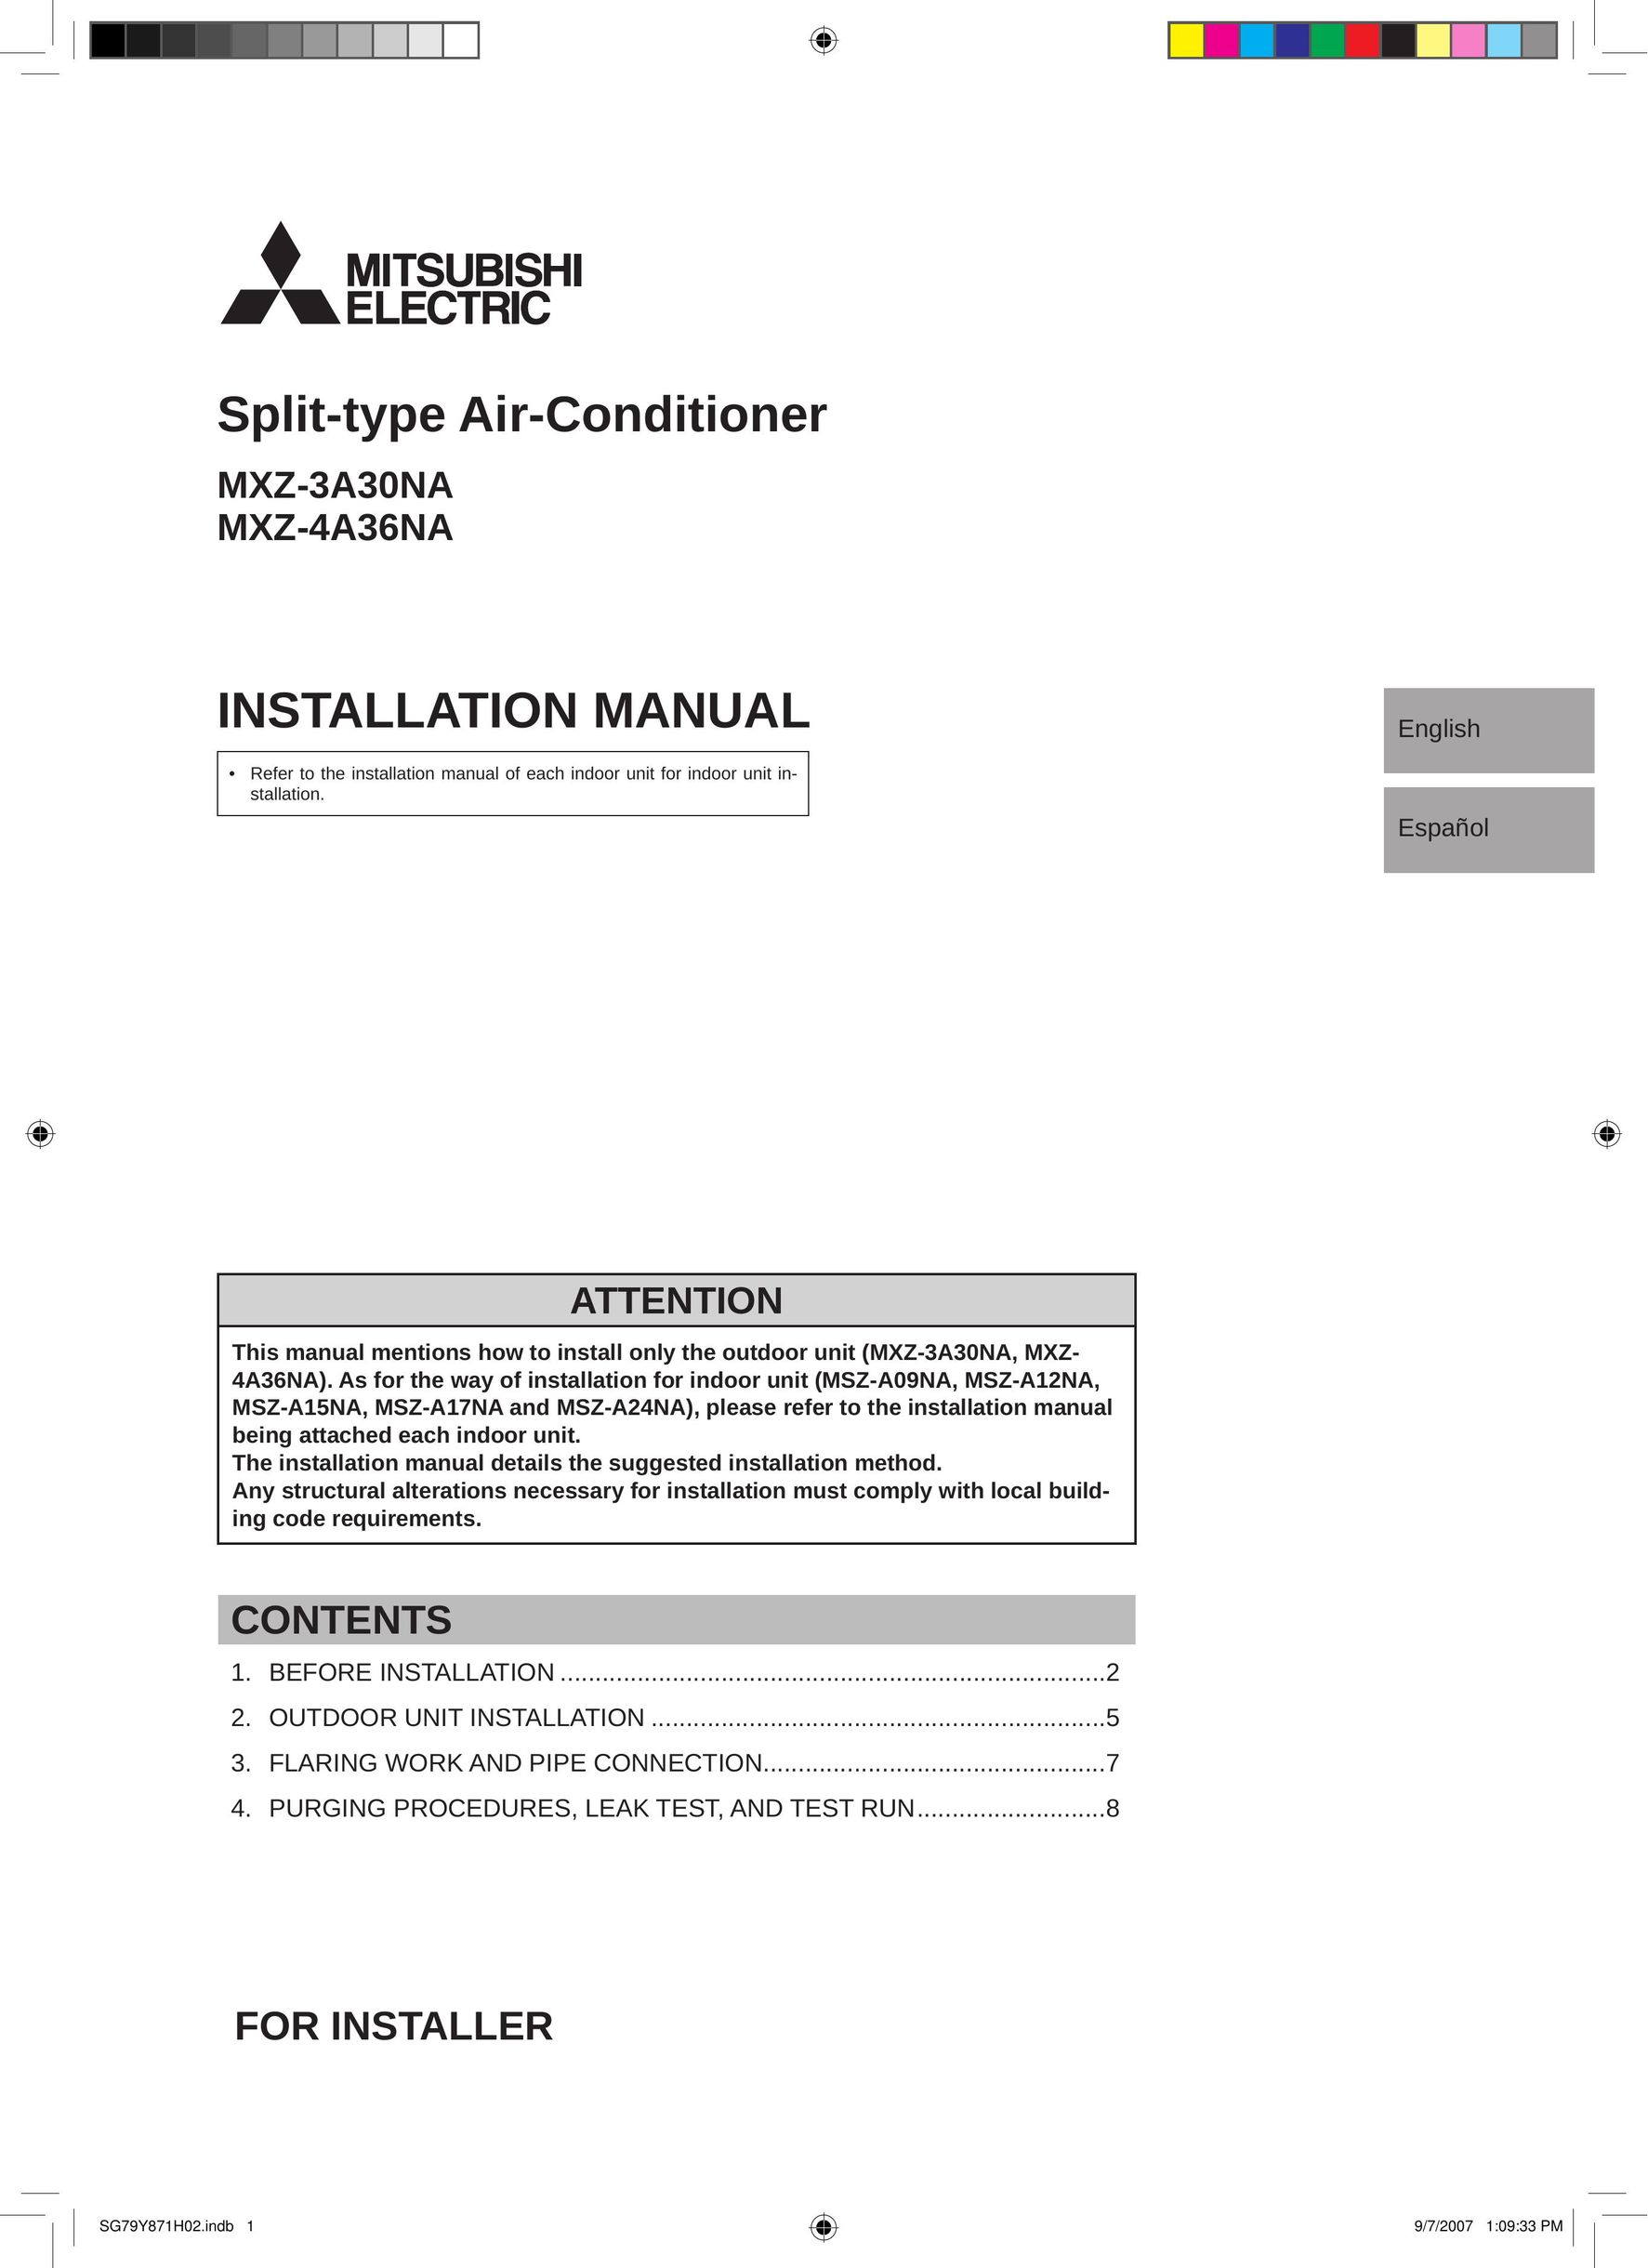 Troy-Bilt MXZ-4A36NA Air Conditioner User Manual